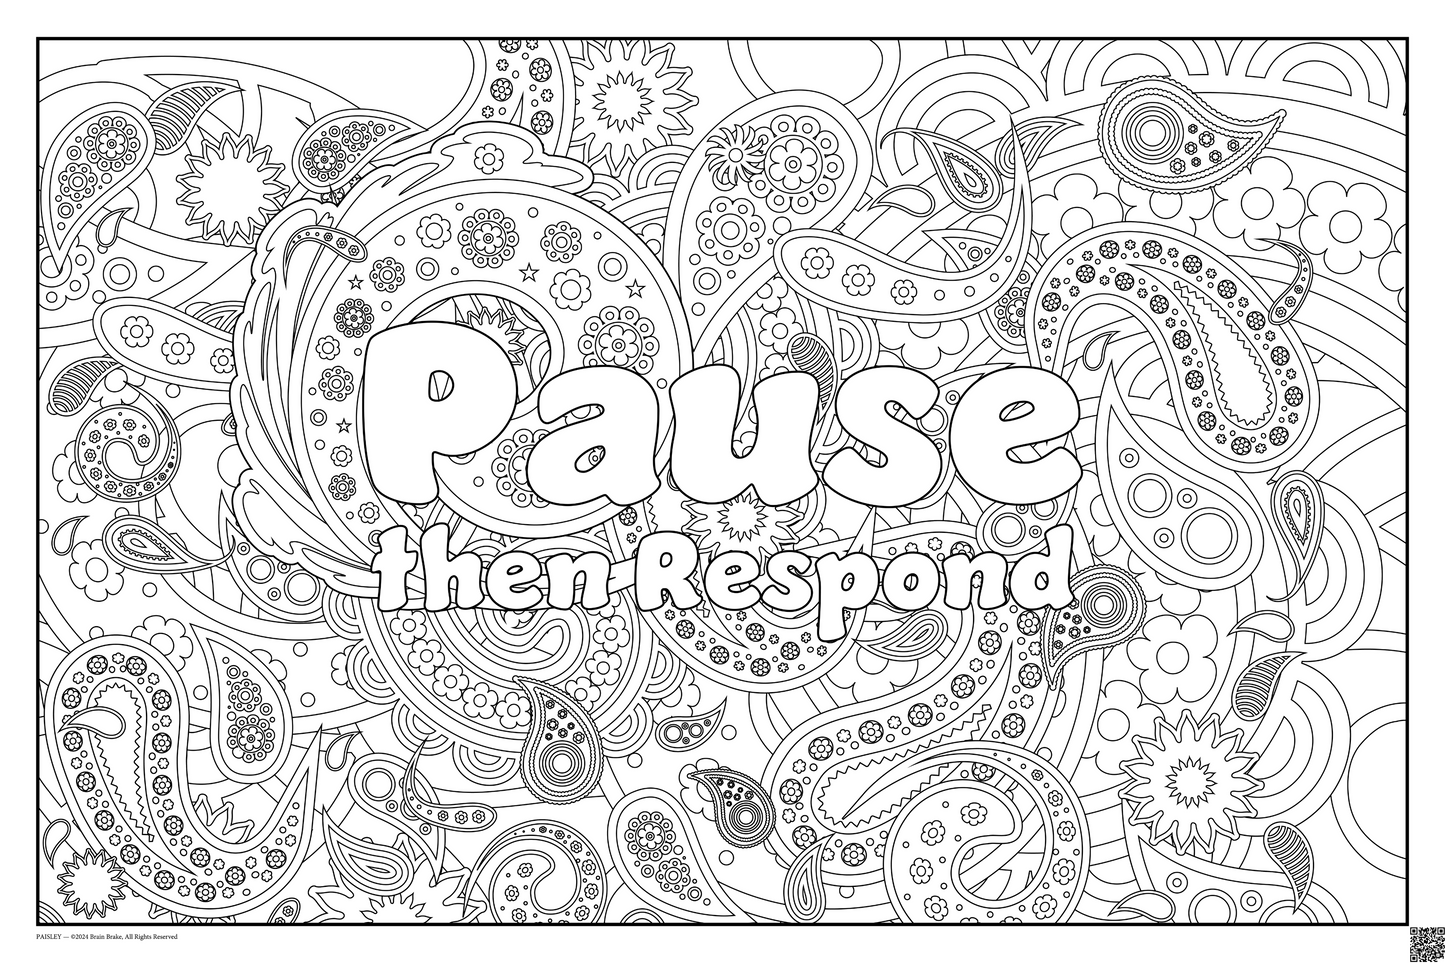 Calming Corner: Pause then Respond